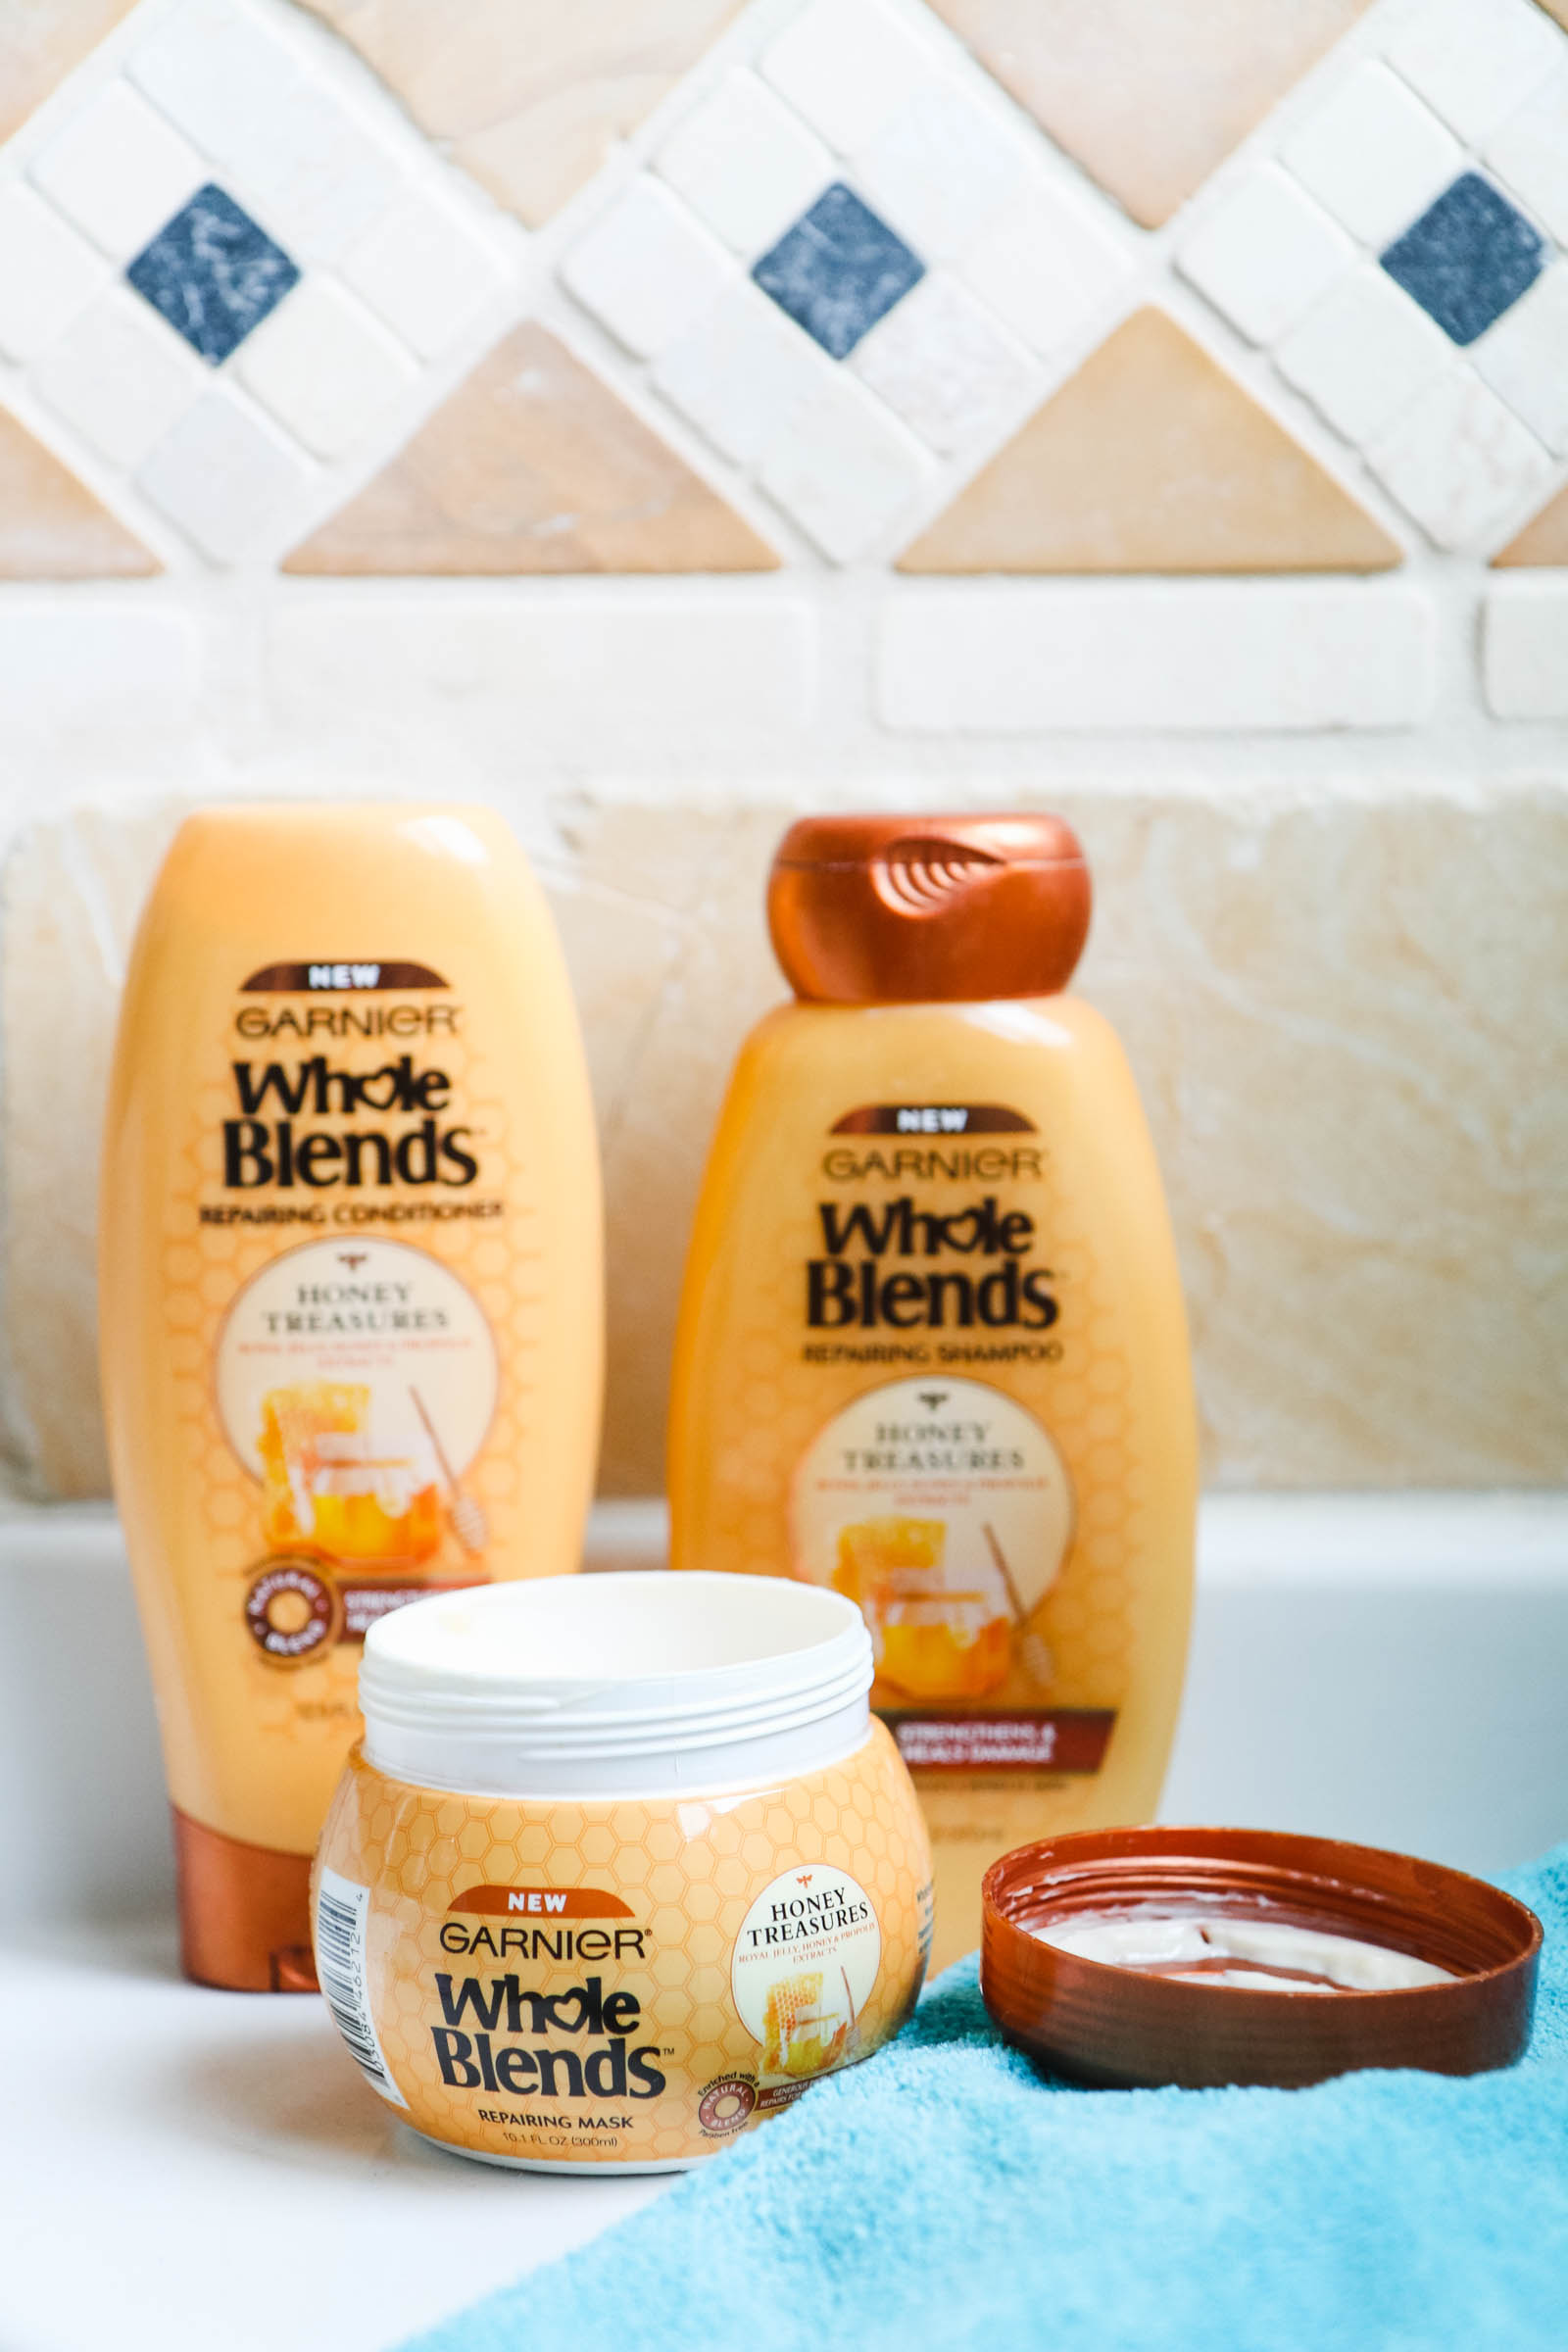 Garnier Whole Blends Honey Treasures